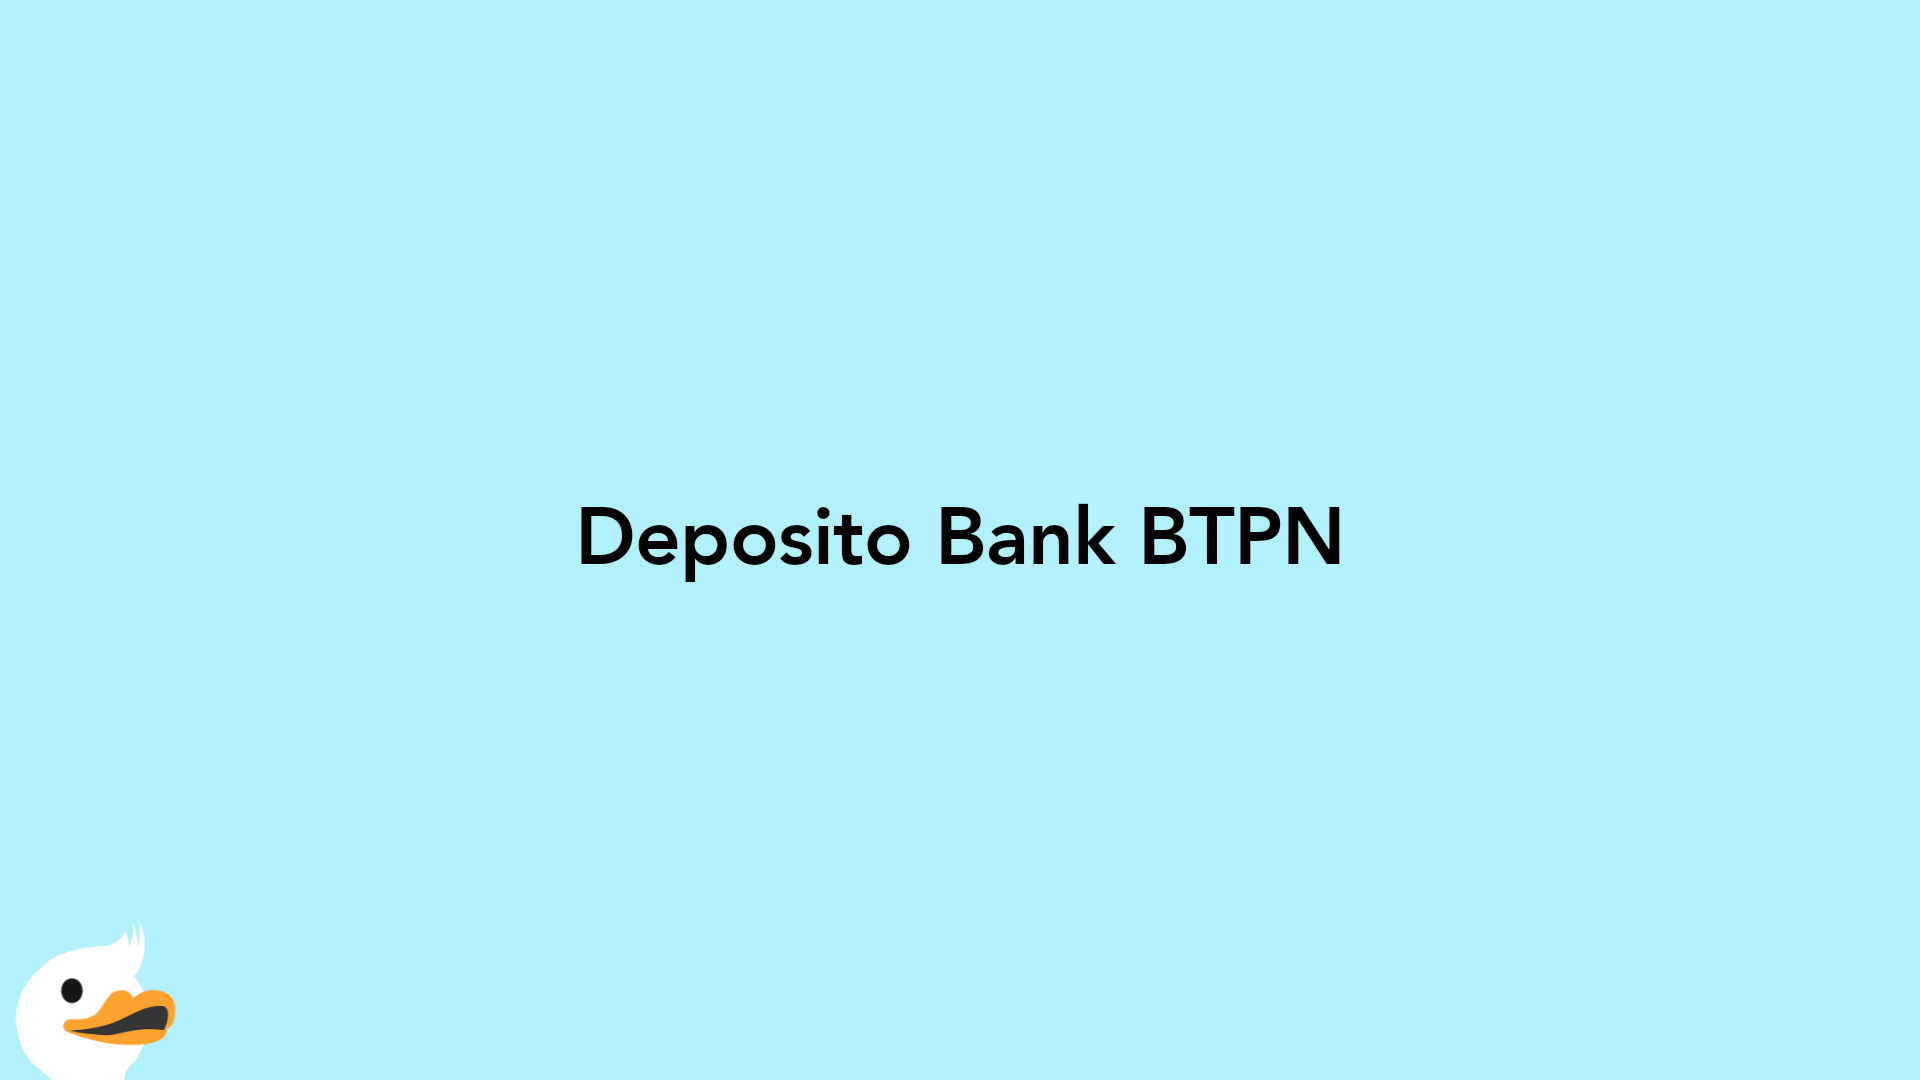 Deposito Bank BTPN